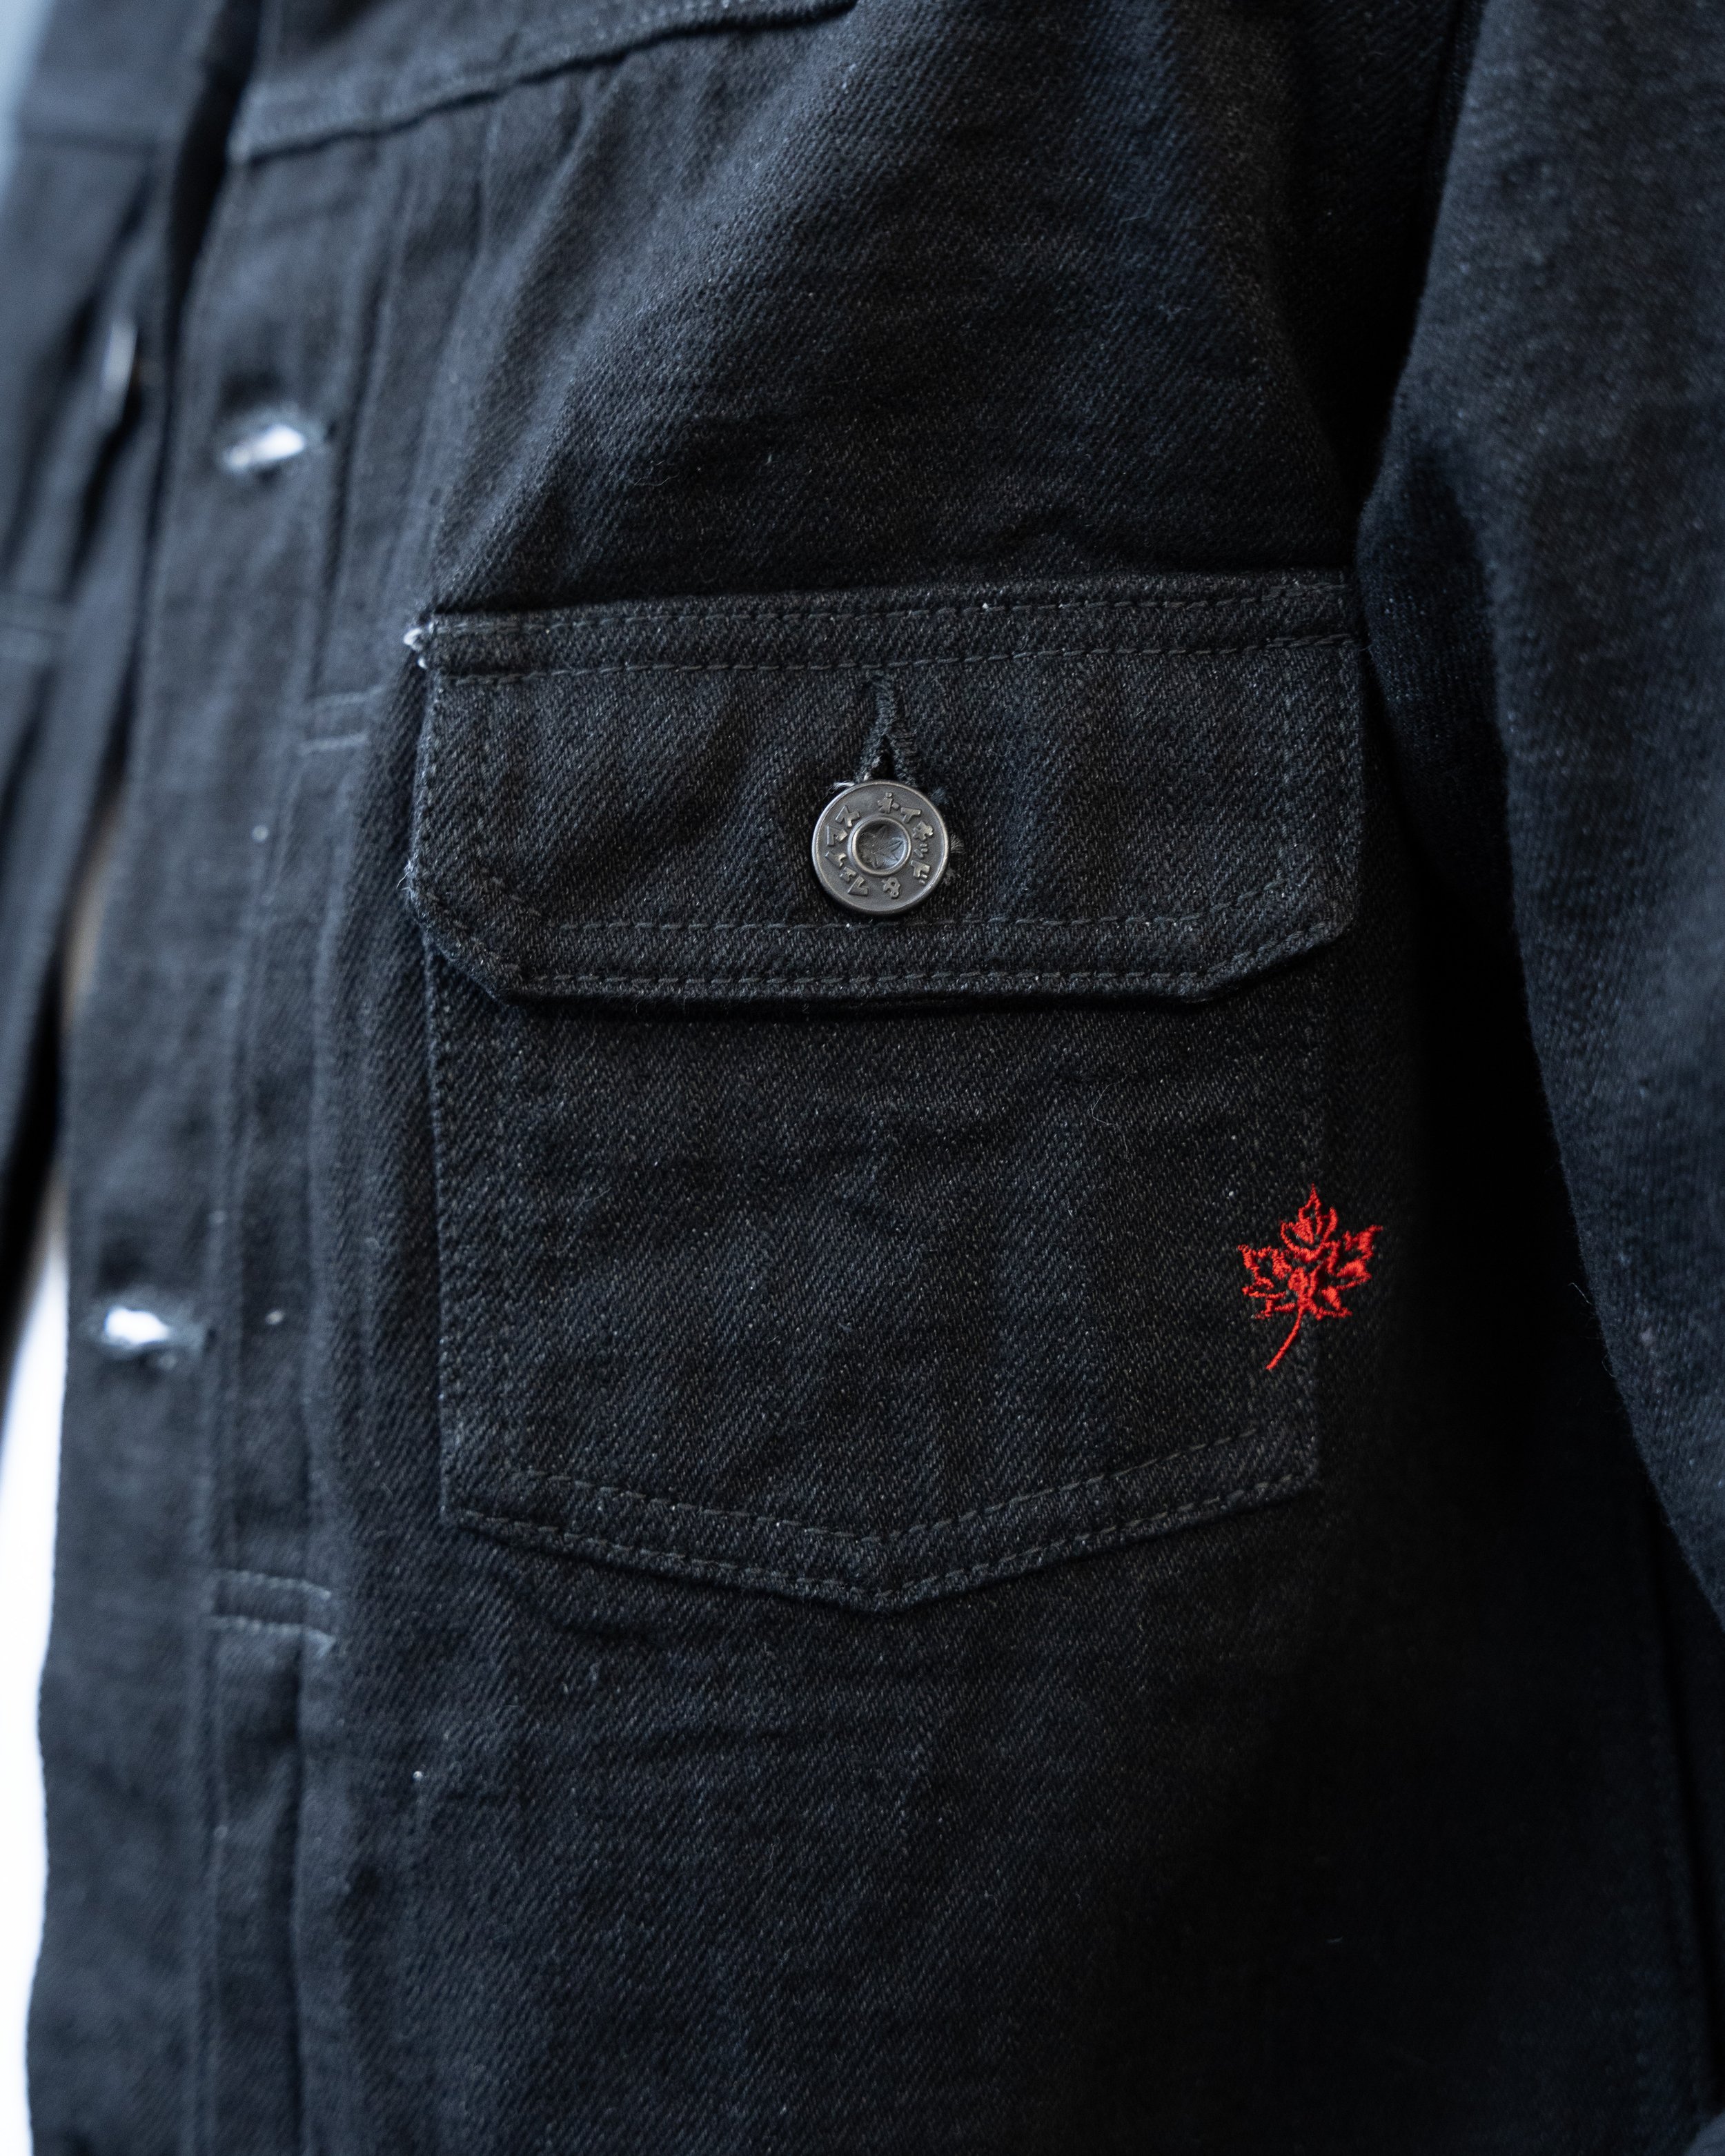 MIJ13 - Okayama Spirit Kuro - Lifestyle - Heritage Jacket Pocket